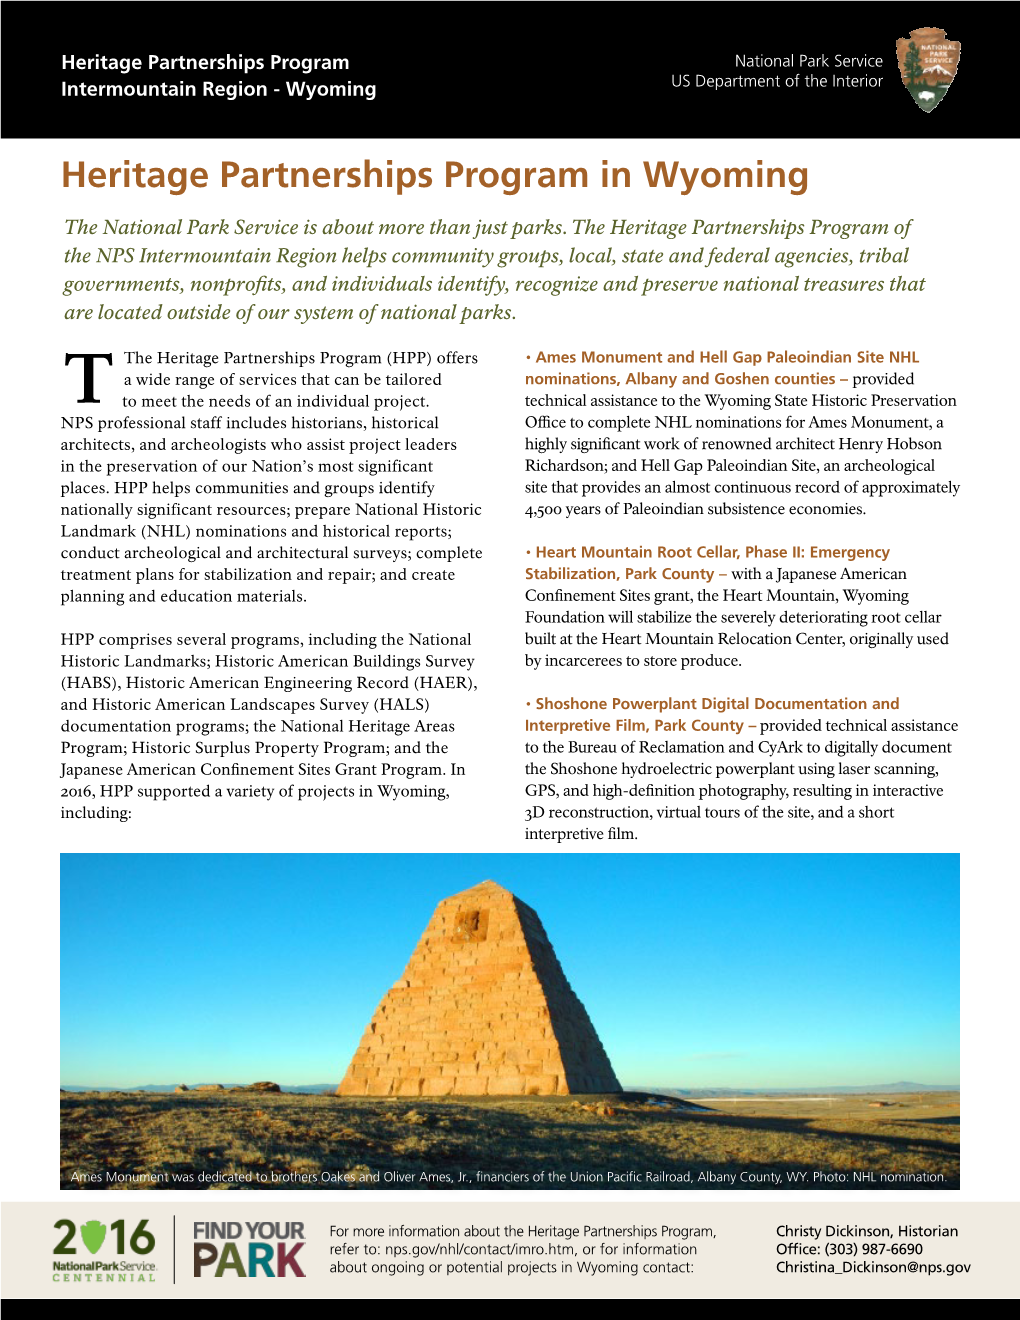 Heritage Partnerships Program in Wyoming